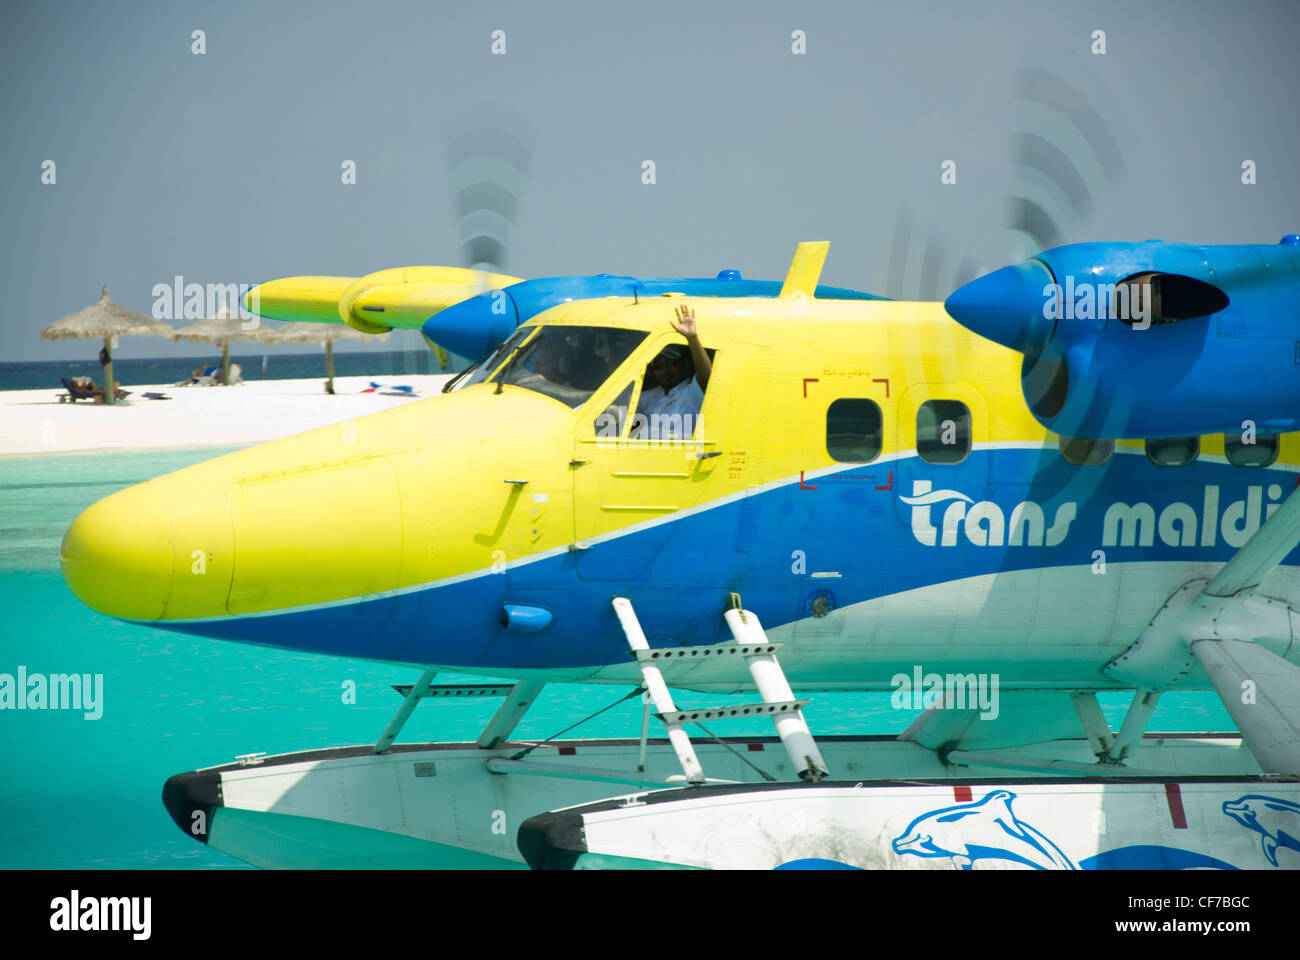 Trans Maldive Island air taxi Stock Photo